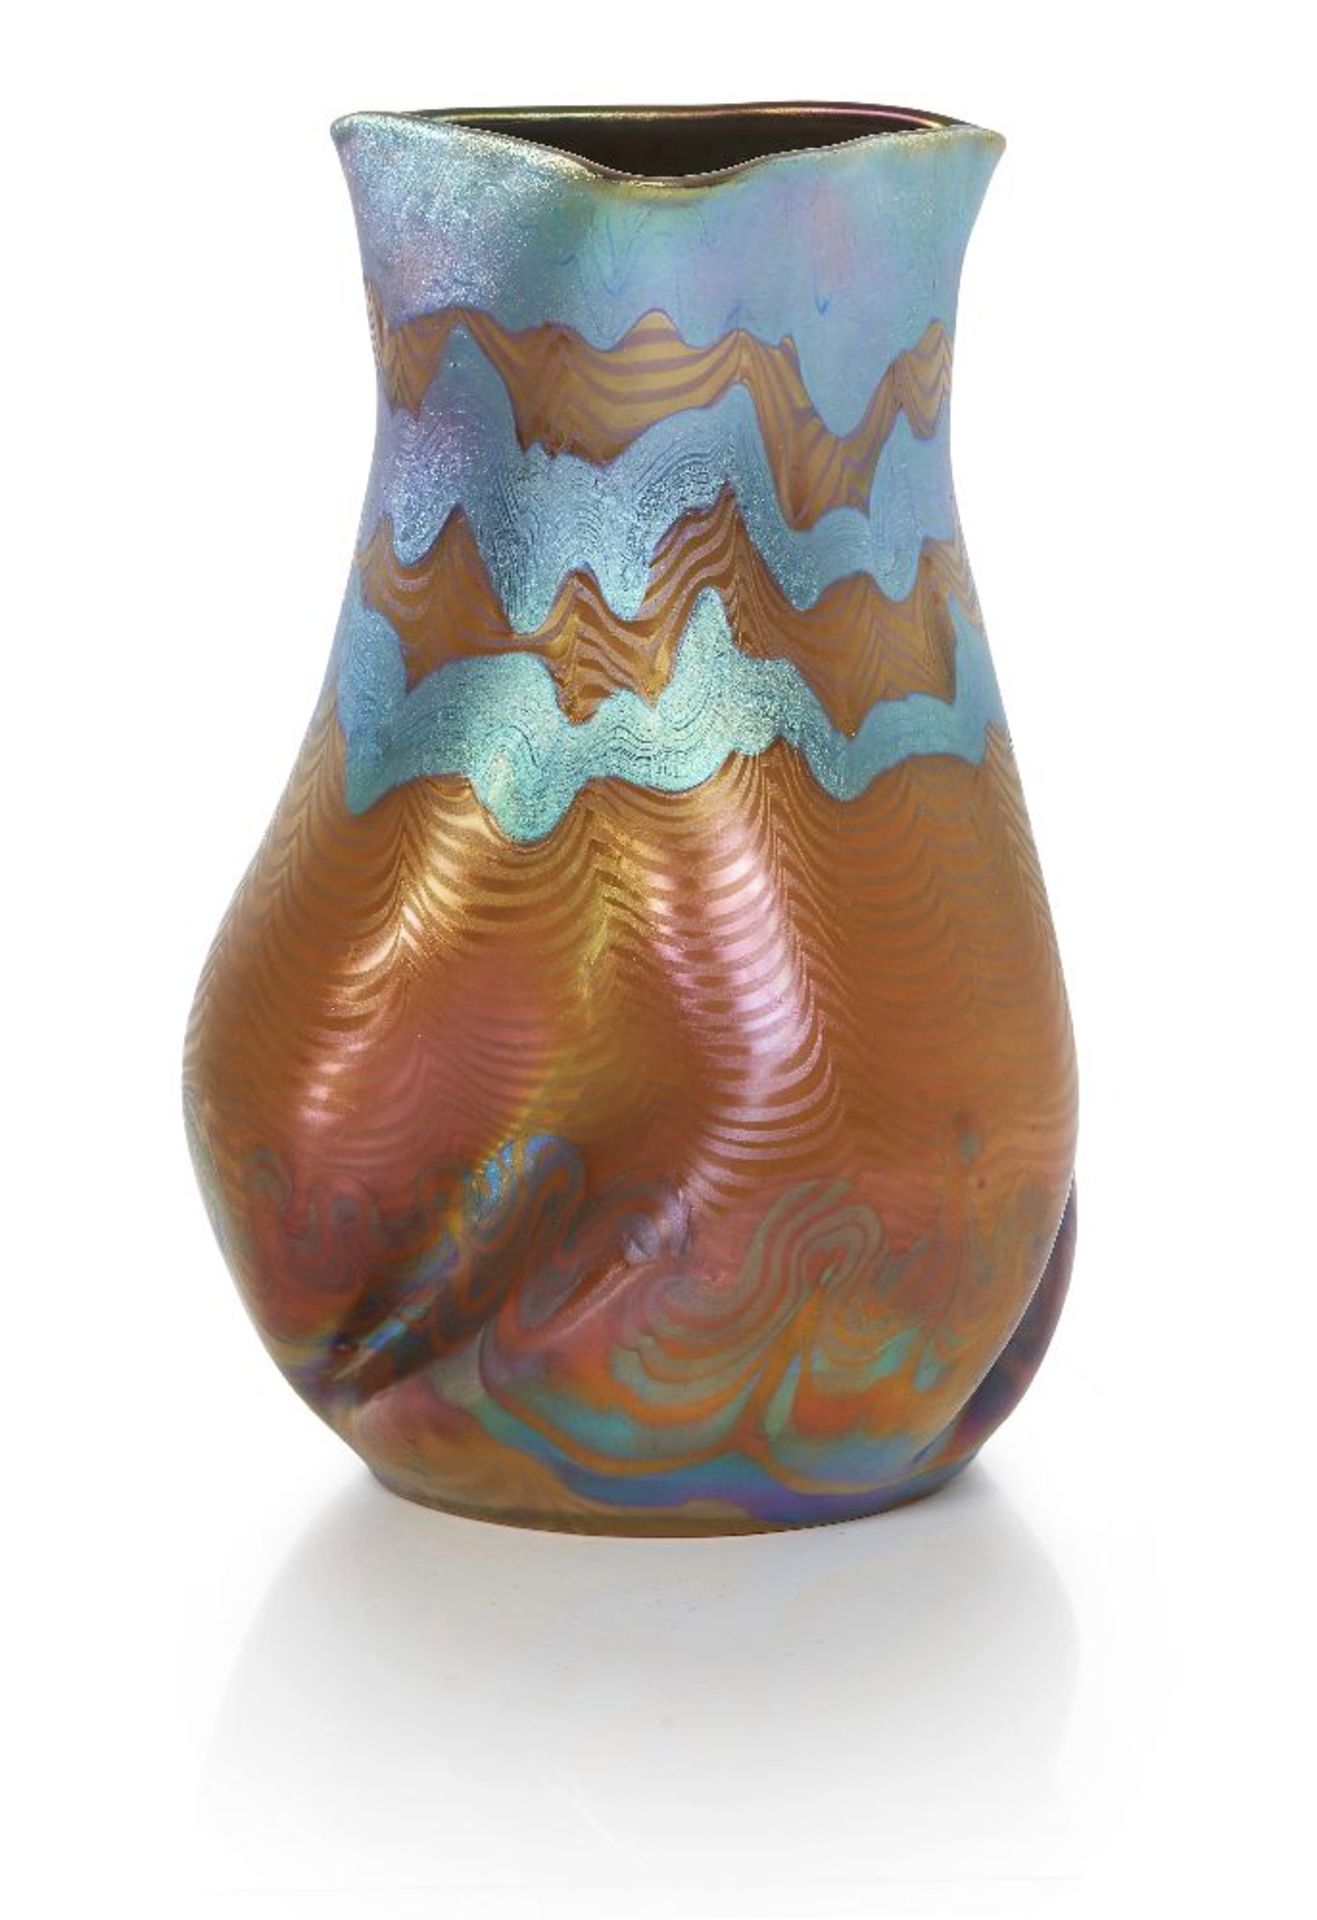 Loetz (Austrian), an iridescent Phaenomen glass vase, c.1902, PG 85/5032, engraved ‘Loetz Austria’